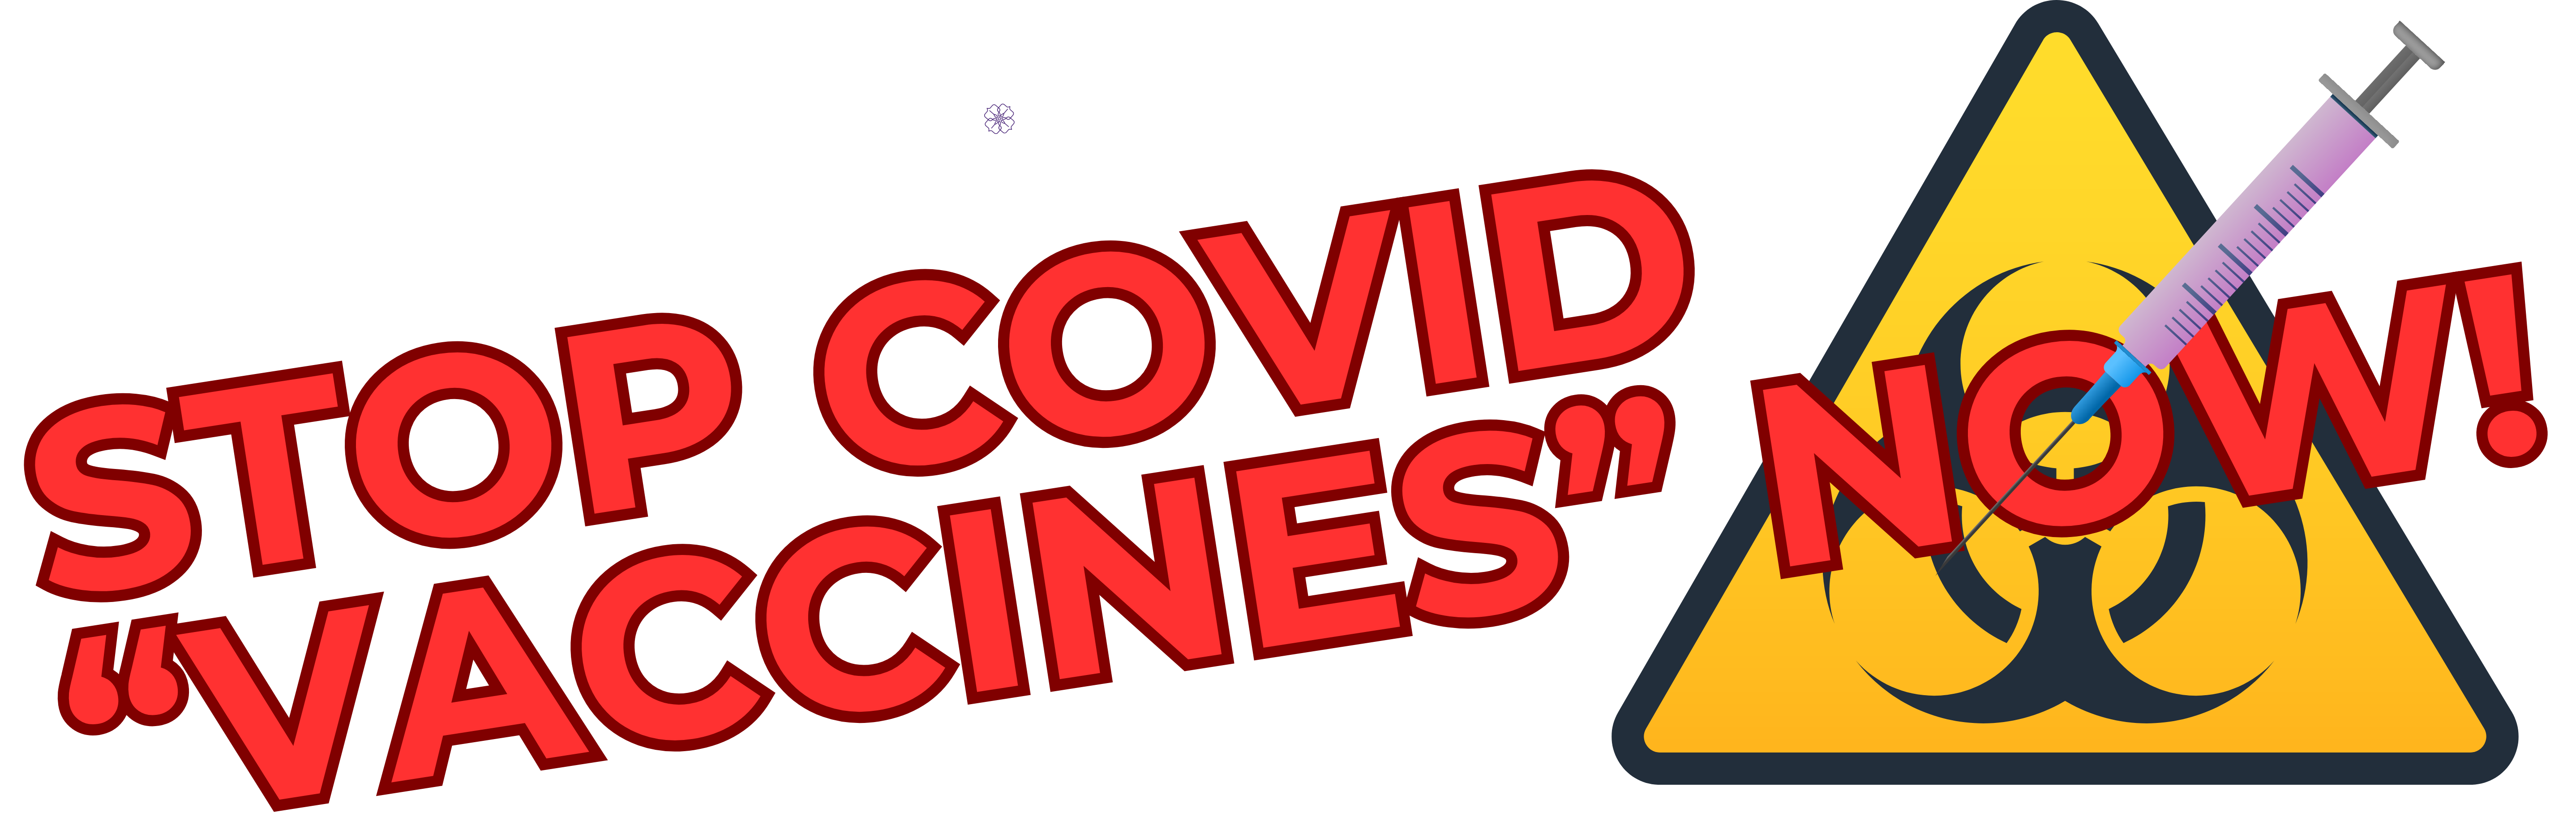 Final Stop Covid Vaccines Now Hazard logo